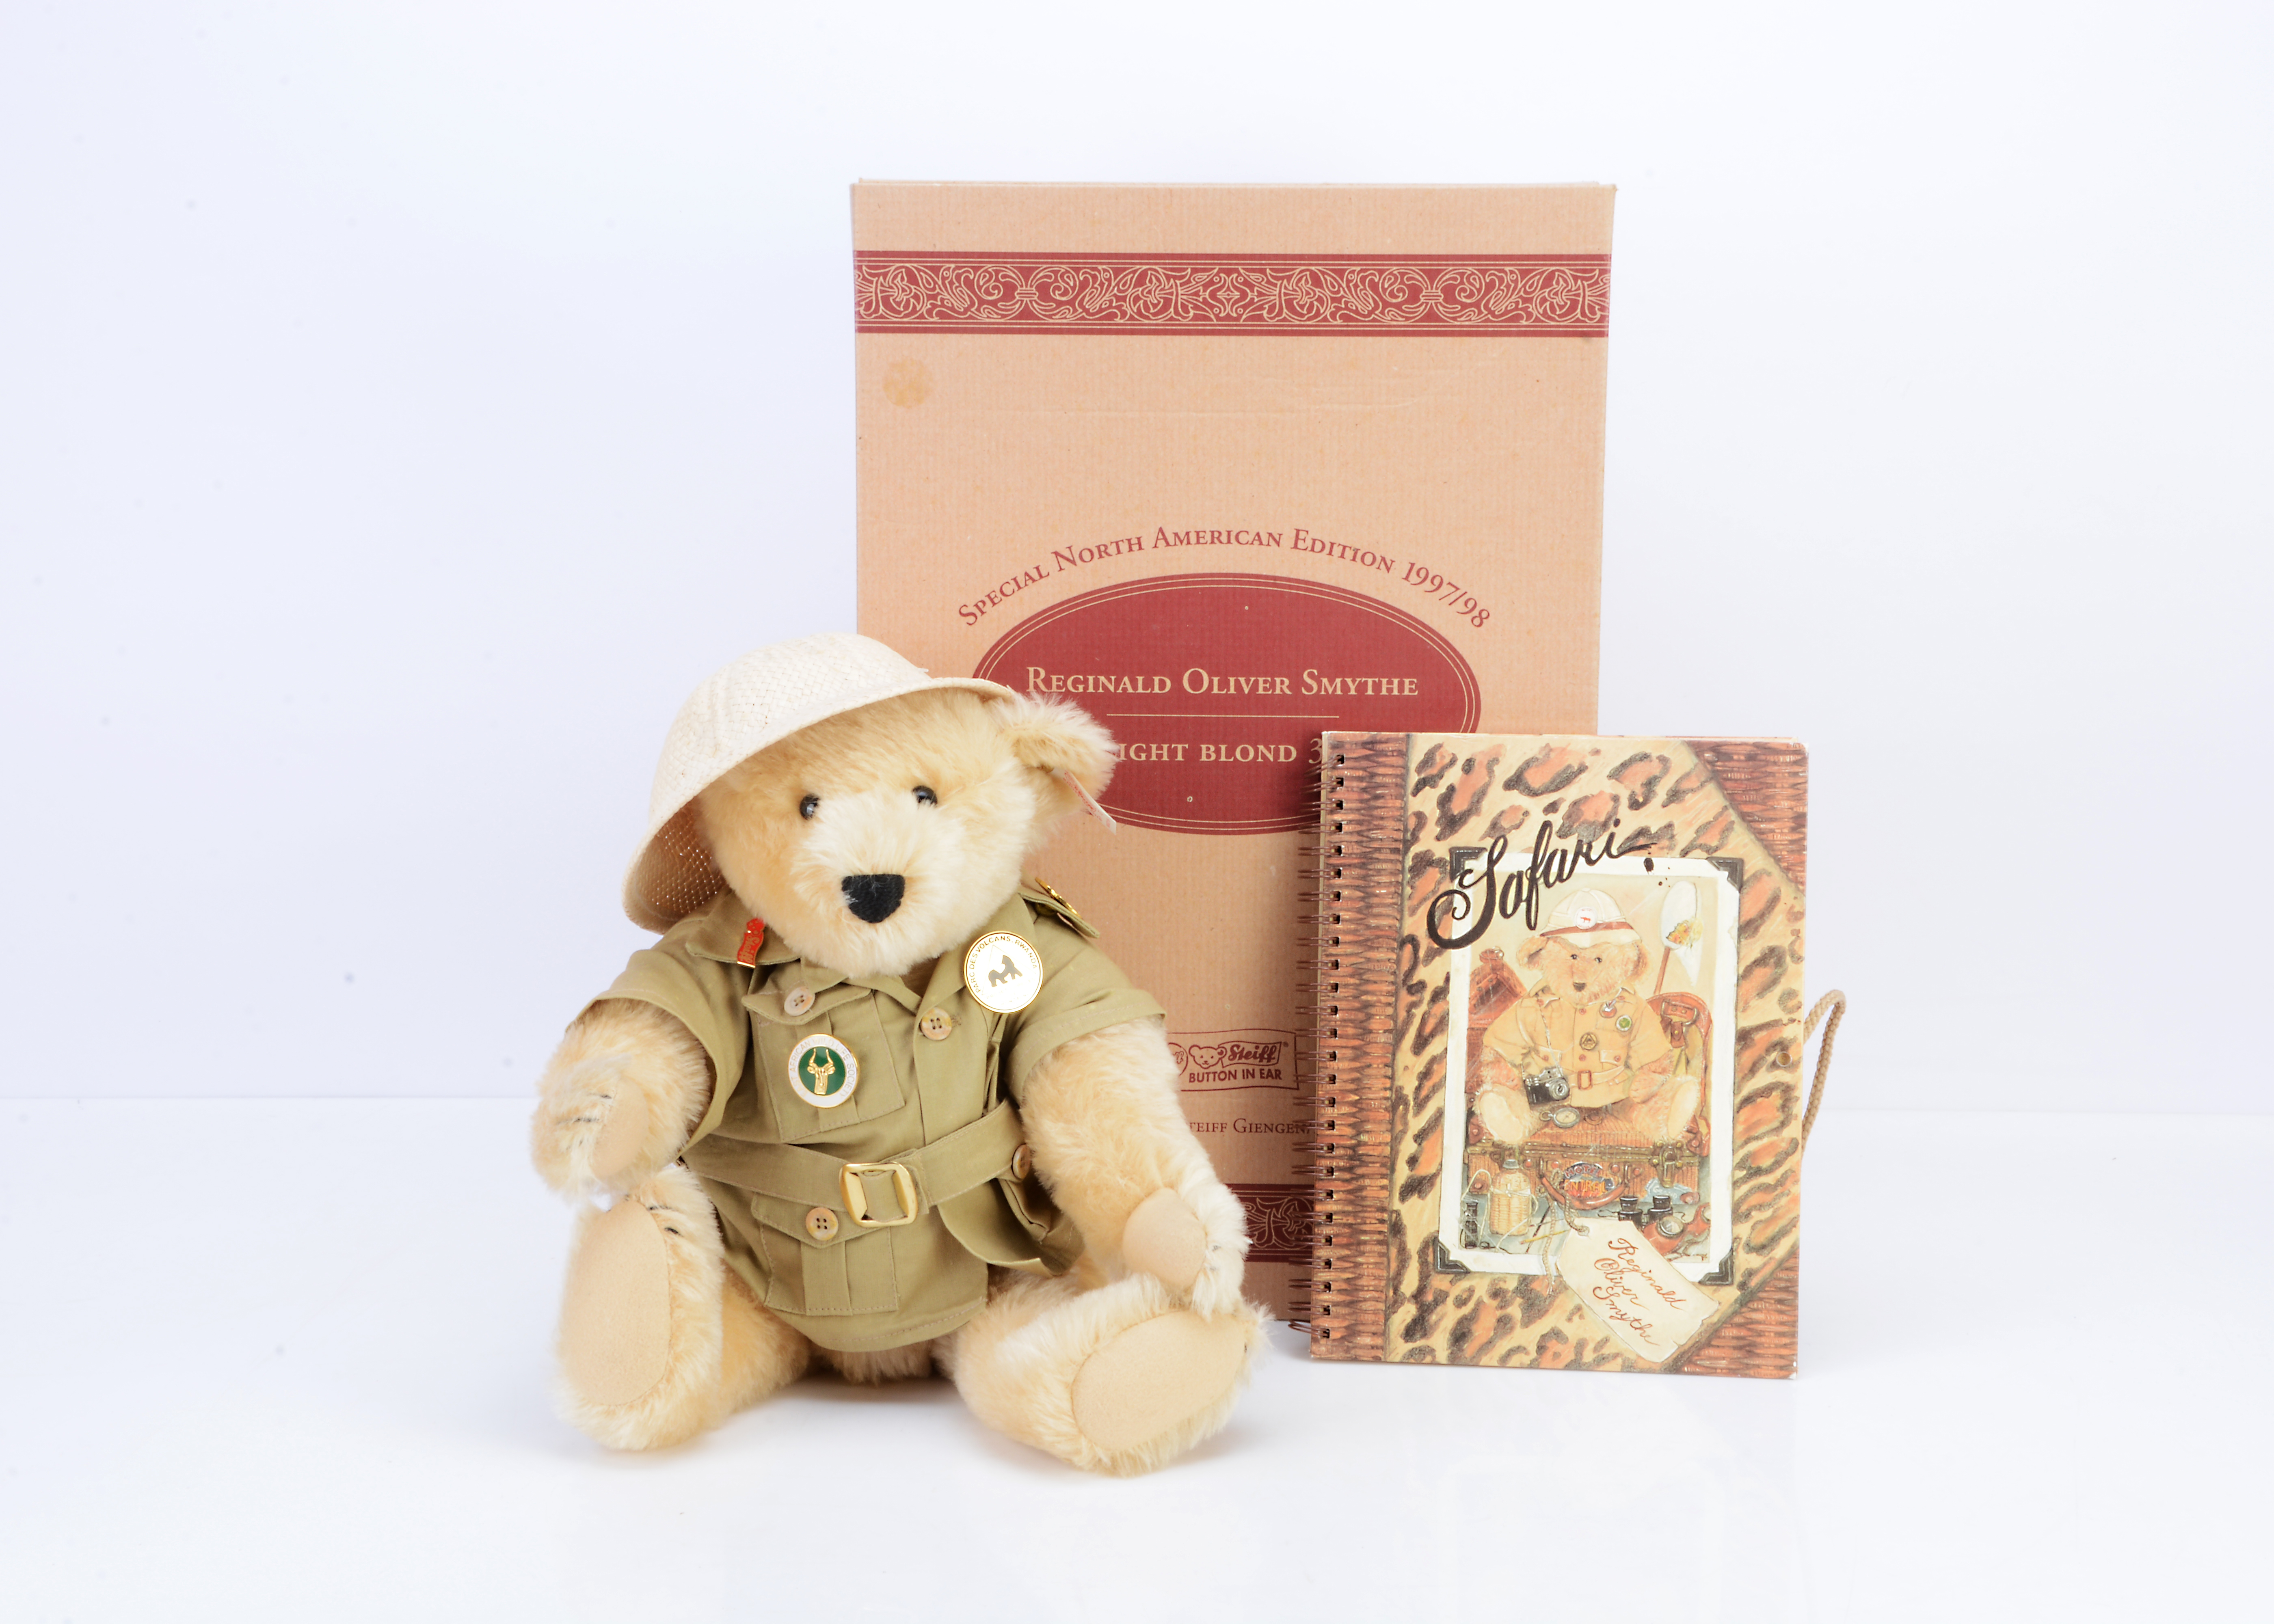 A Steiff limited edition Reginald Oliver Smythe "Reggie"  teddy bear